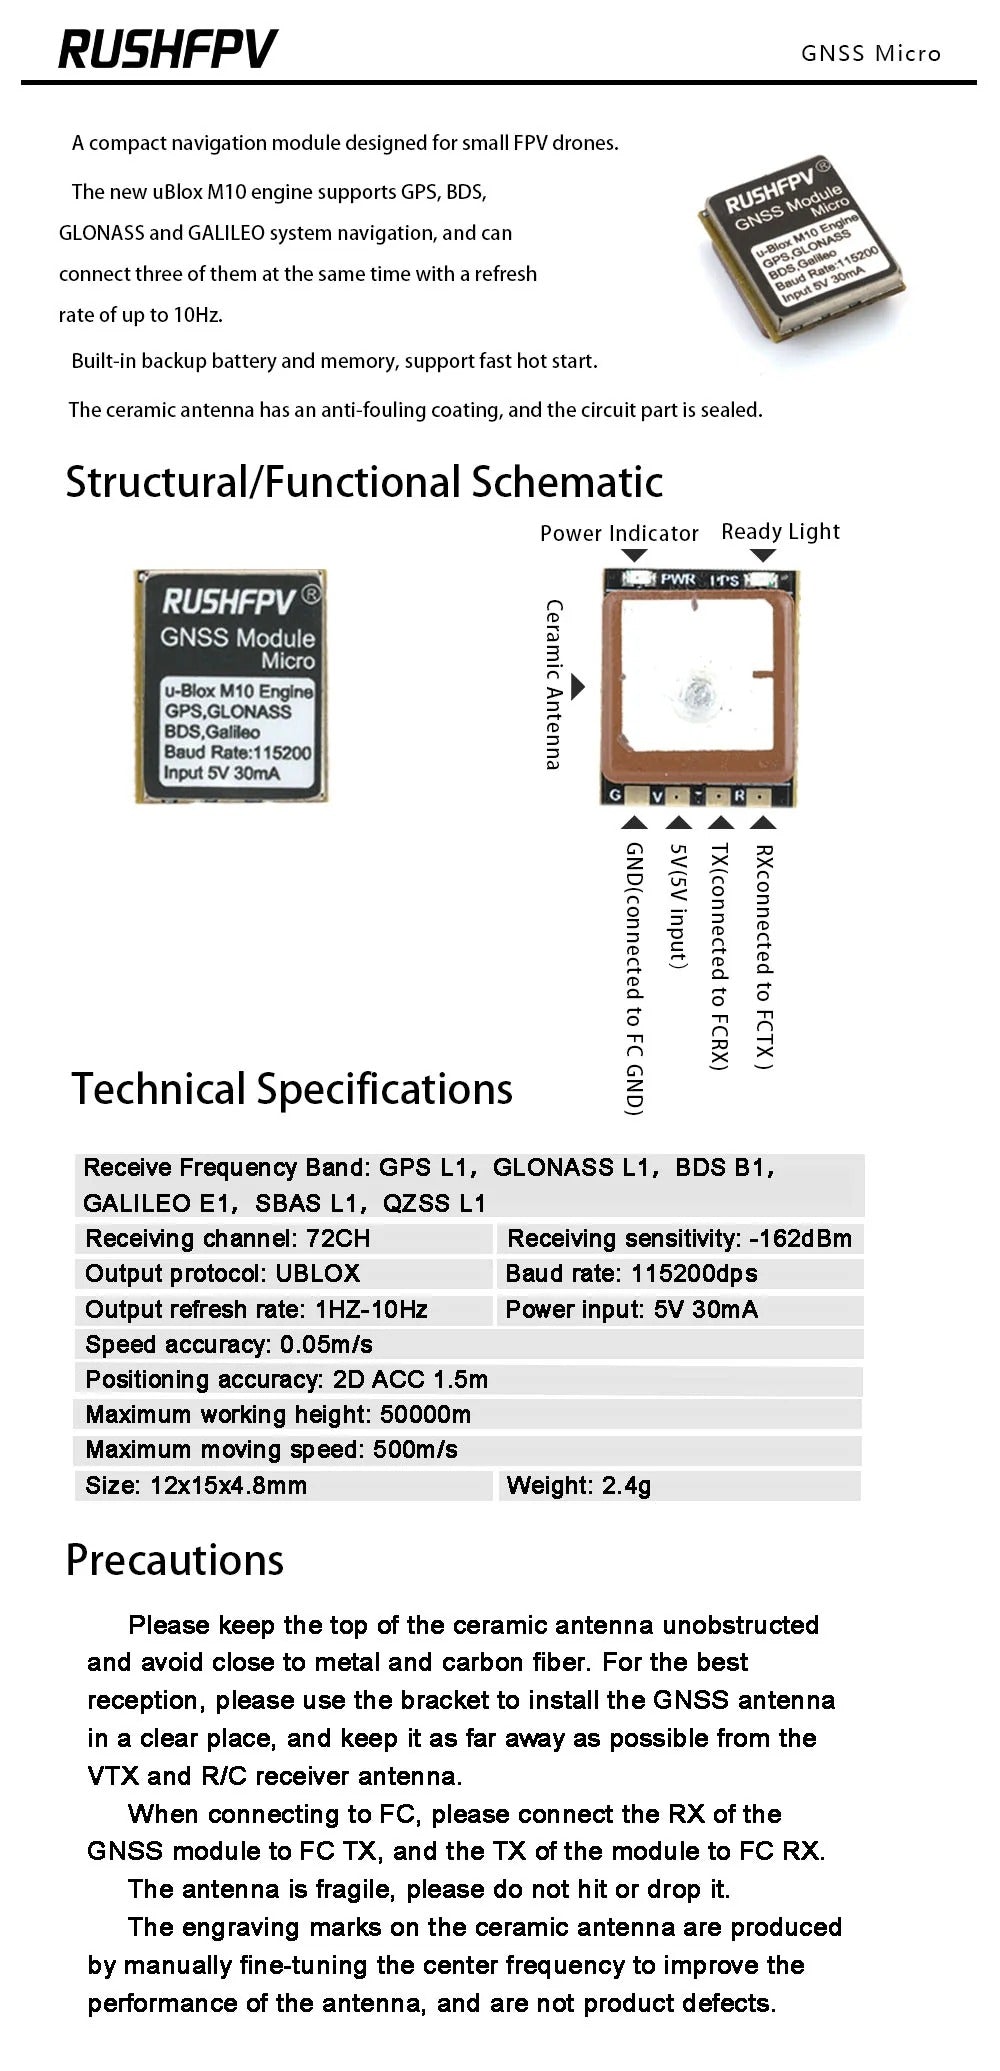 RUSHFPV GNSS Micro GPS